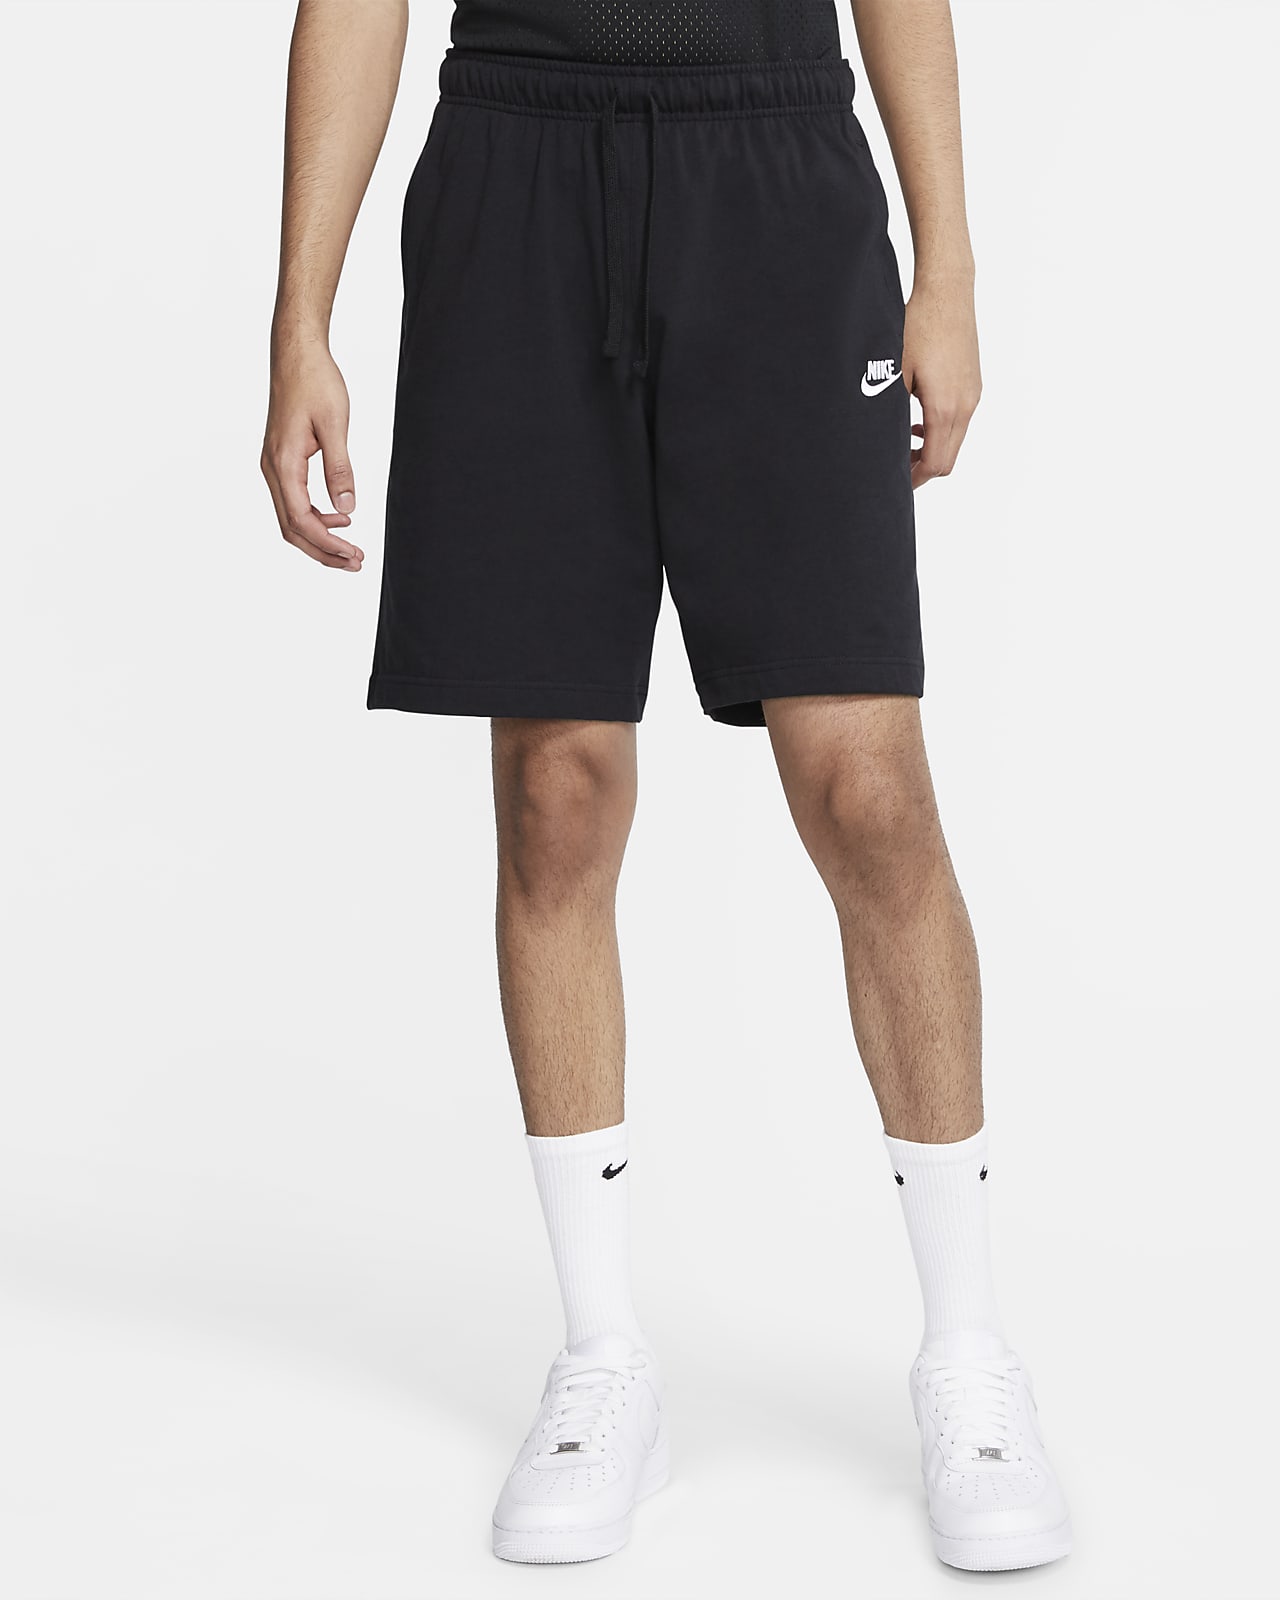 Nike Sweat Shorts United Kingdom, SAVE 